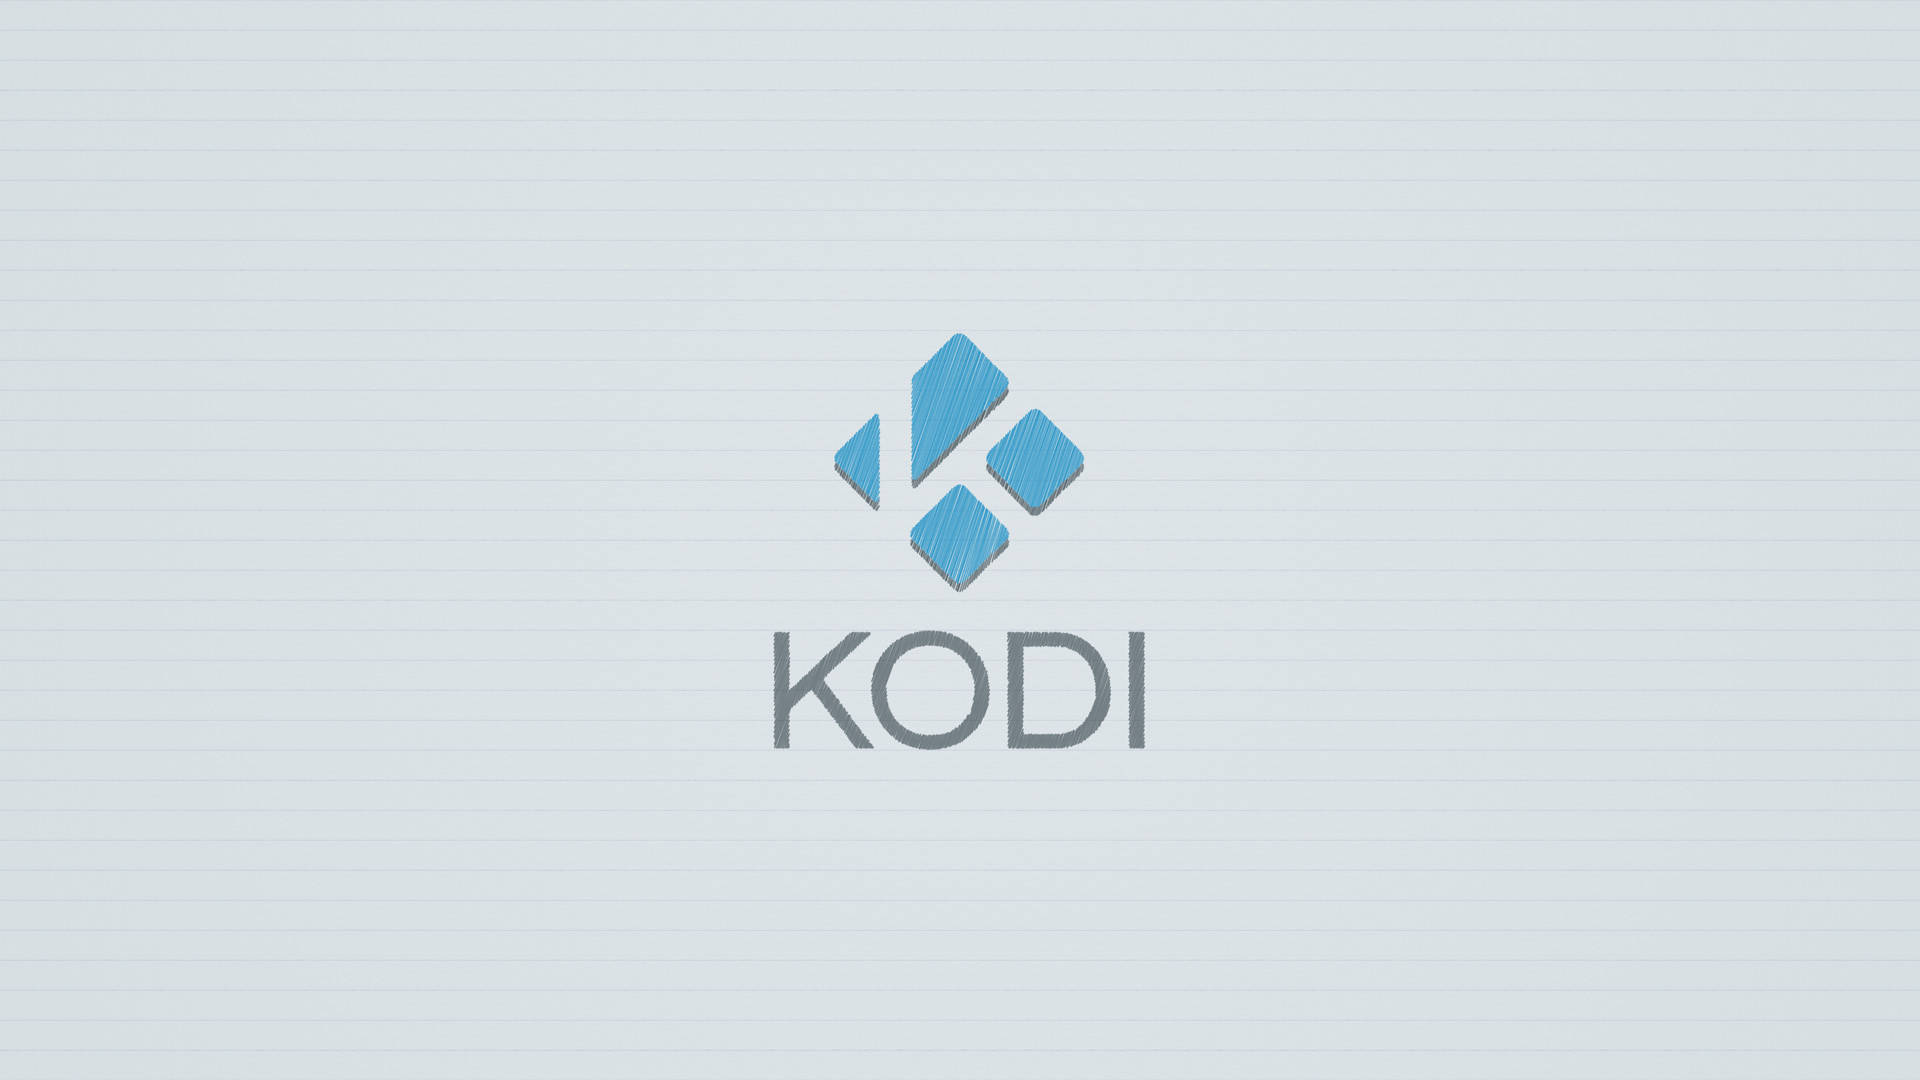 Kodi Logo On White Background